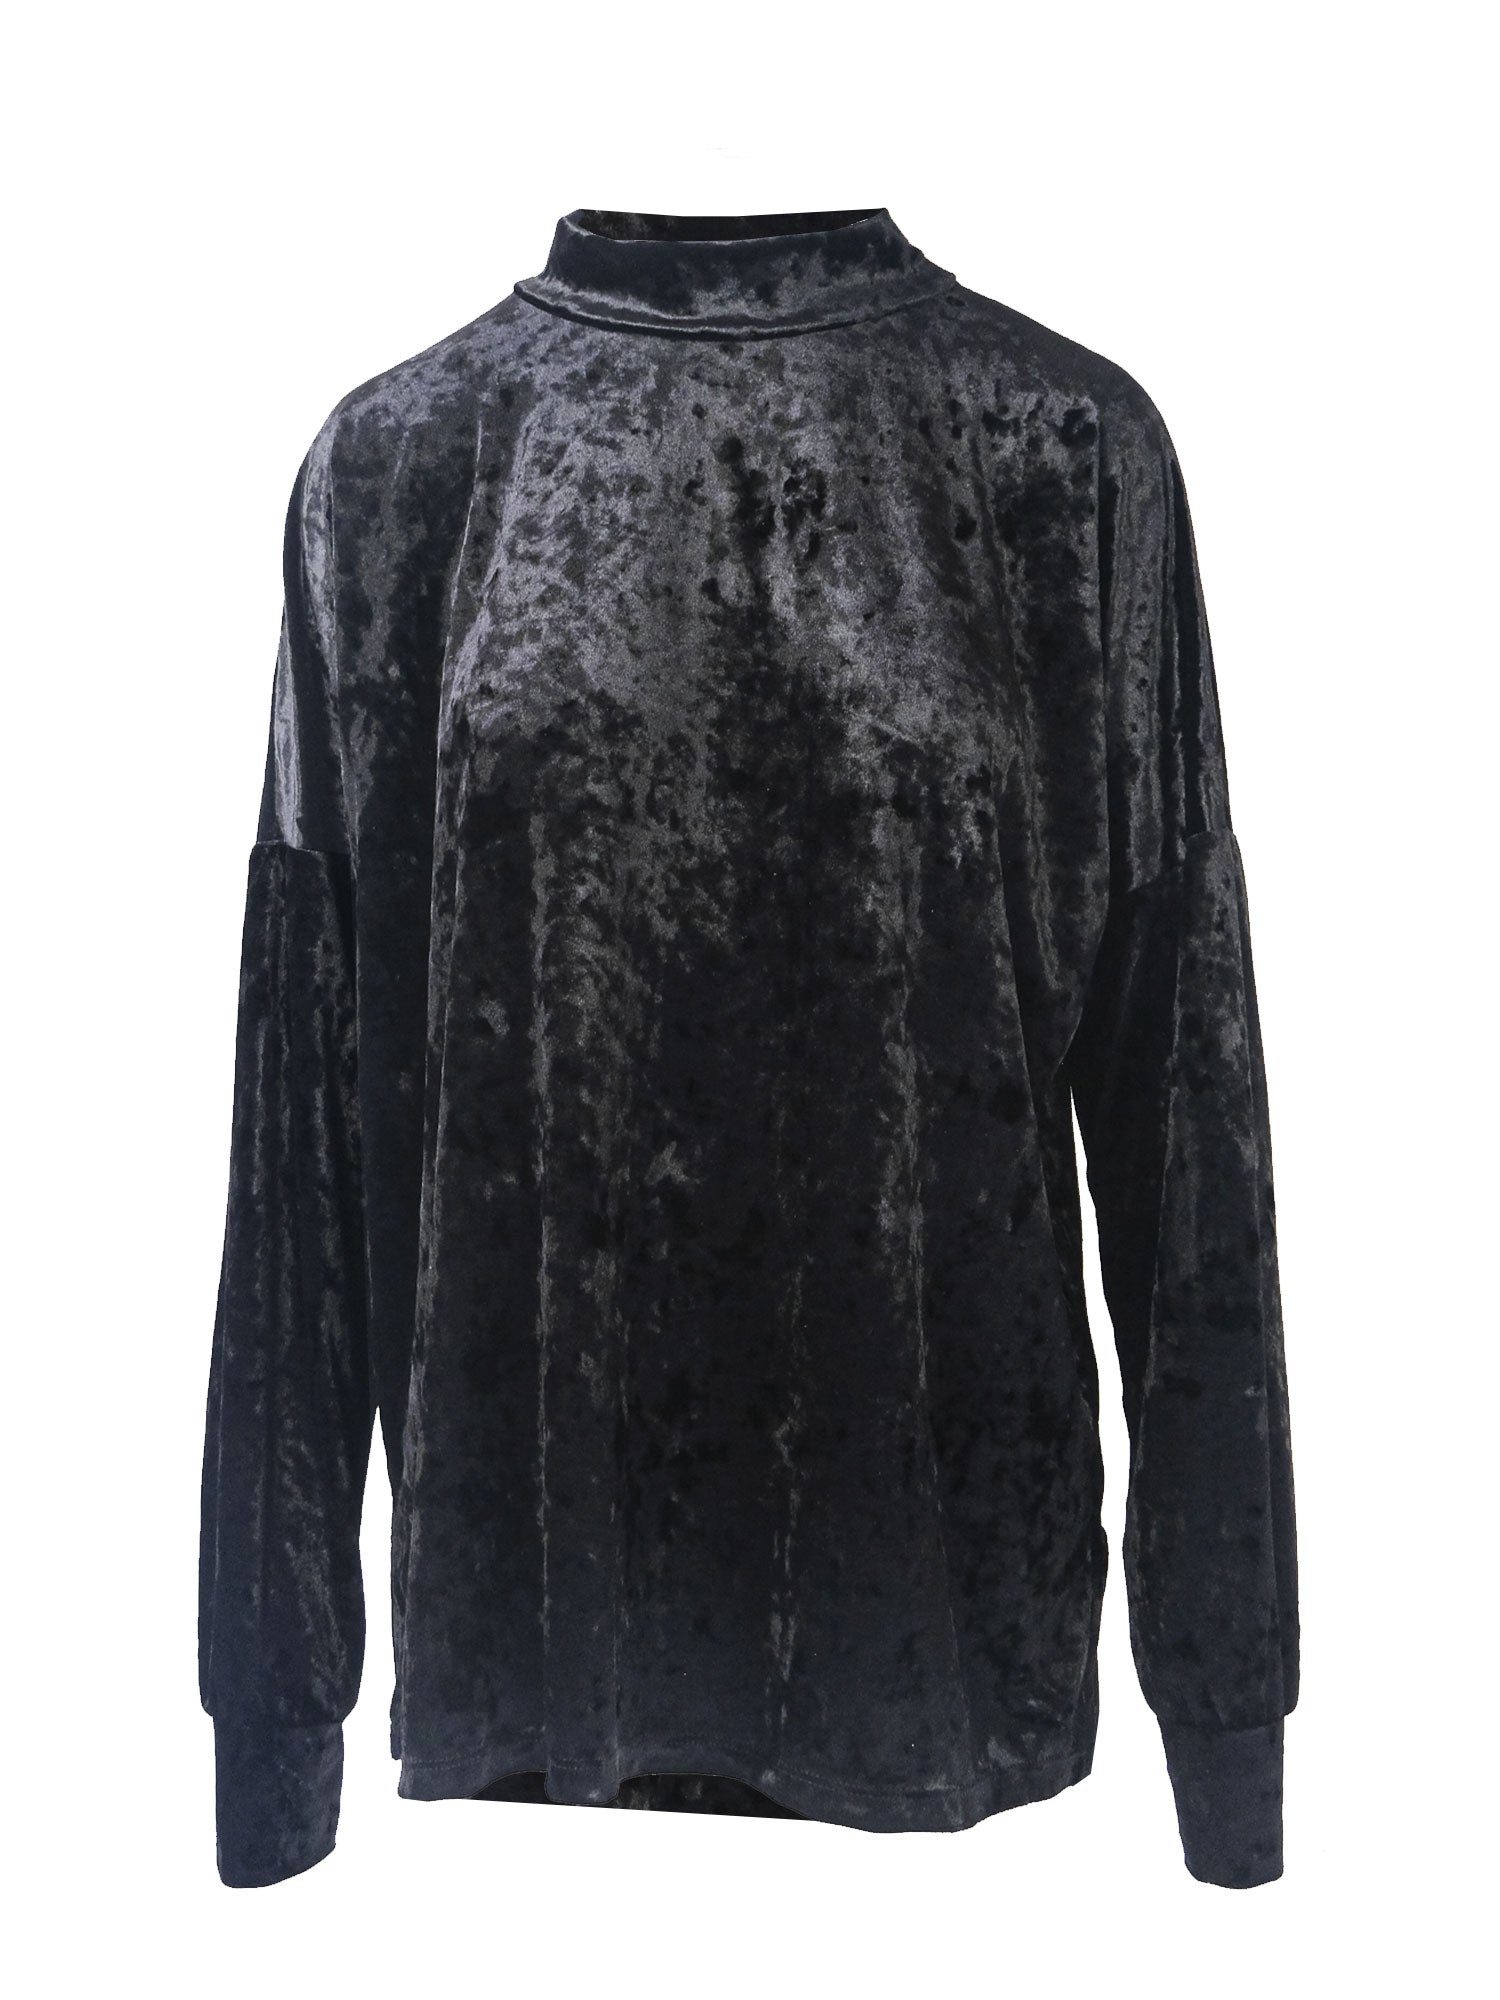 FLORENCE - black hammered chenille sweatshirt